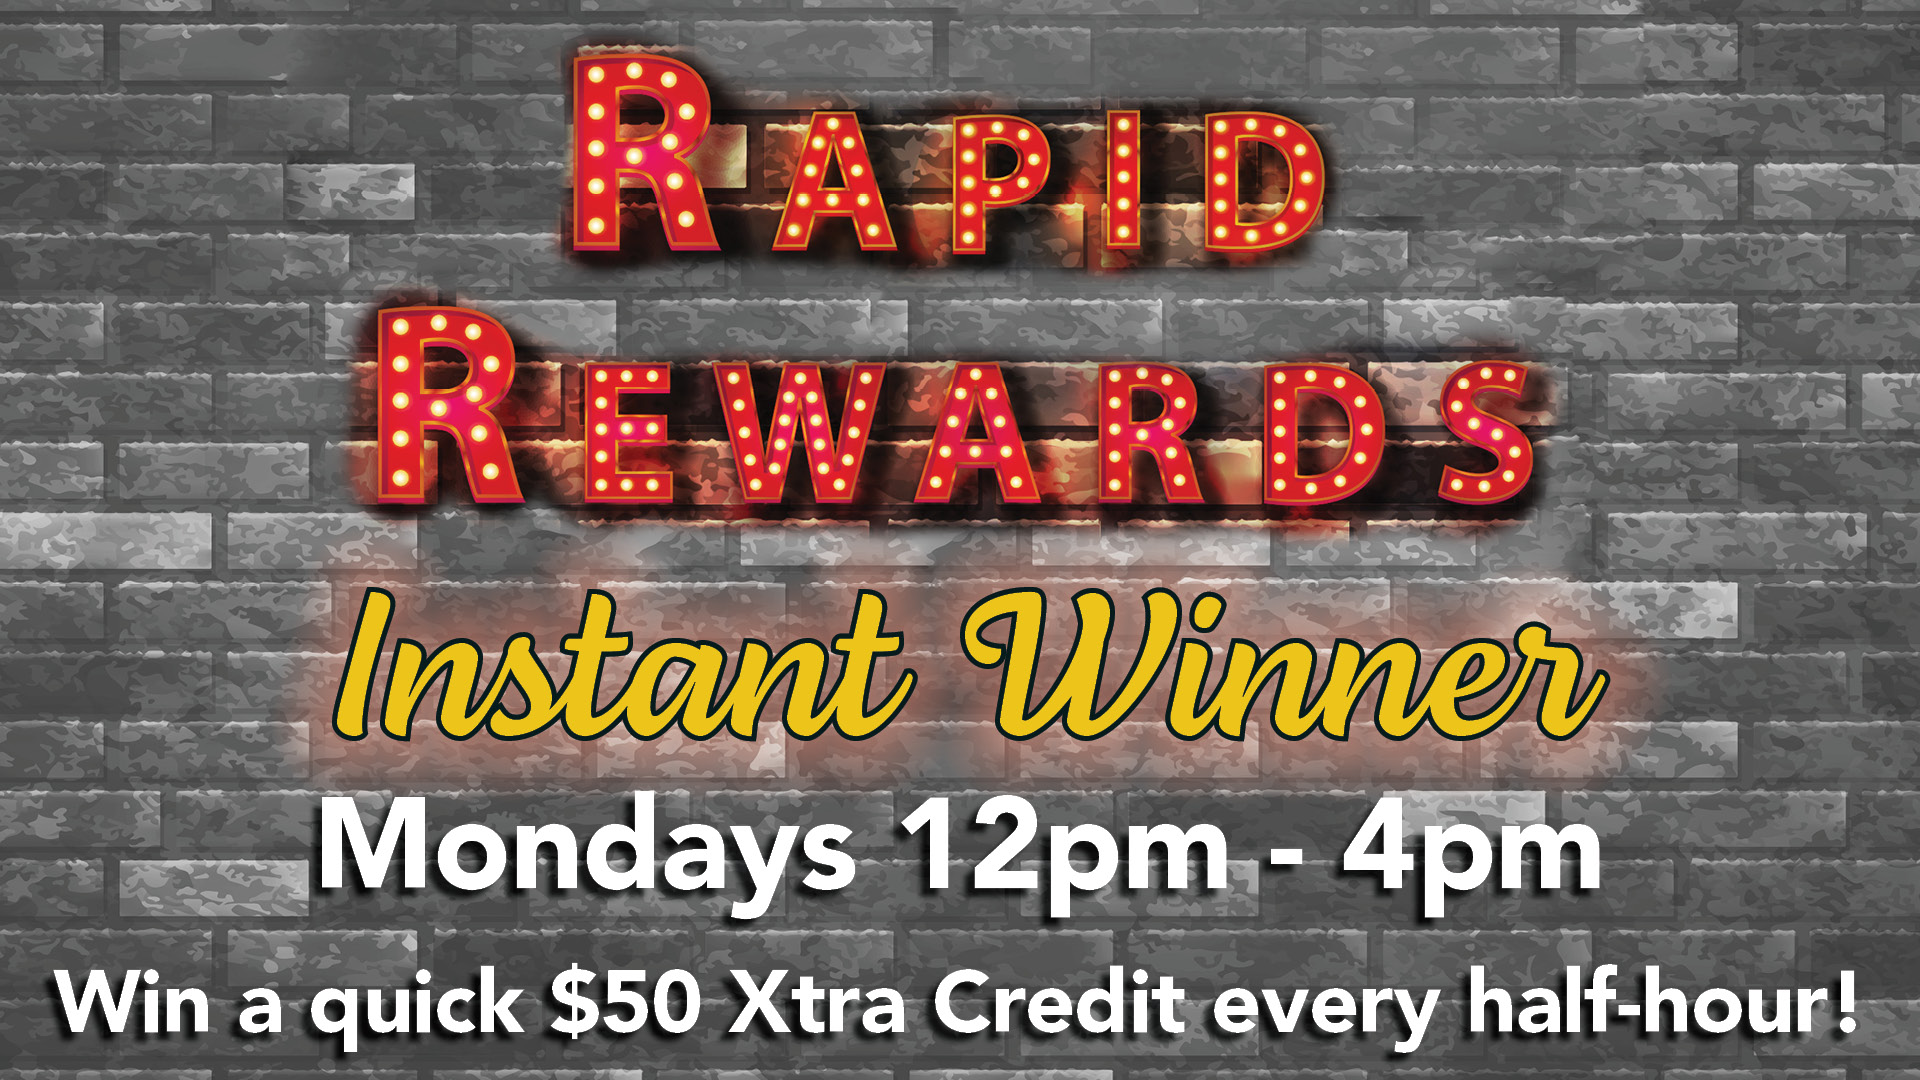 Rapid Rewards Instant Winner, Rapid Rewards, instant rewards, instant winner, Xtra Credit, Monday, Monday promotion, hot seat drawings, hot seats, skgaming, s&k Gaming, kwataqnuk promotion, kwataqnuk